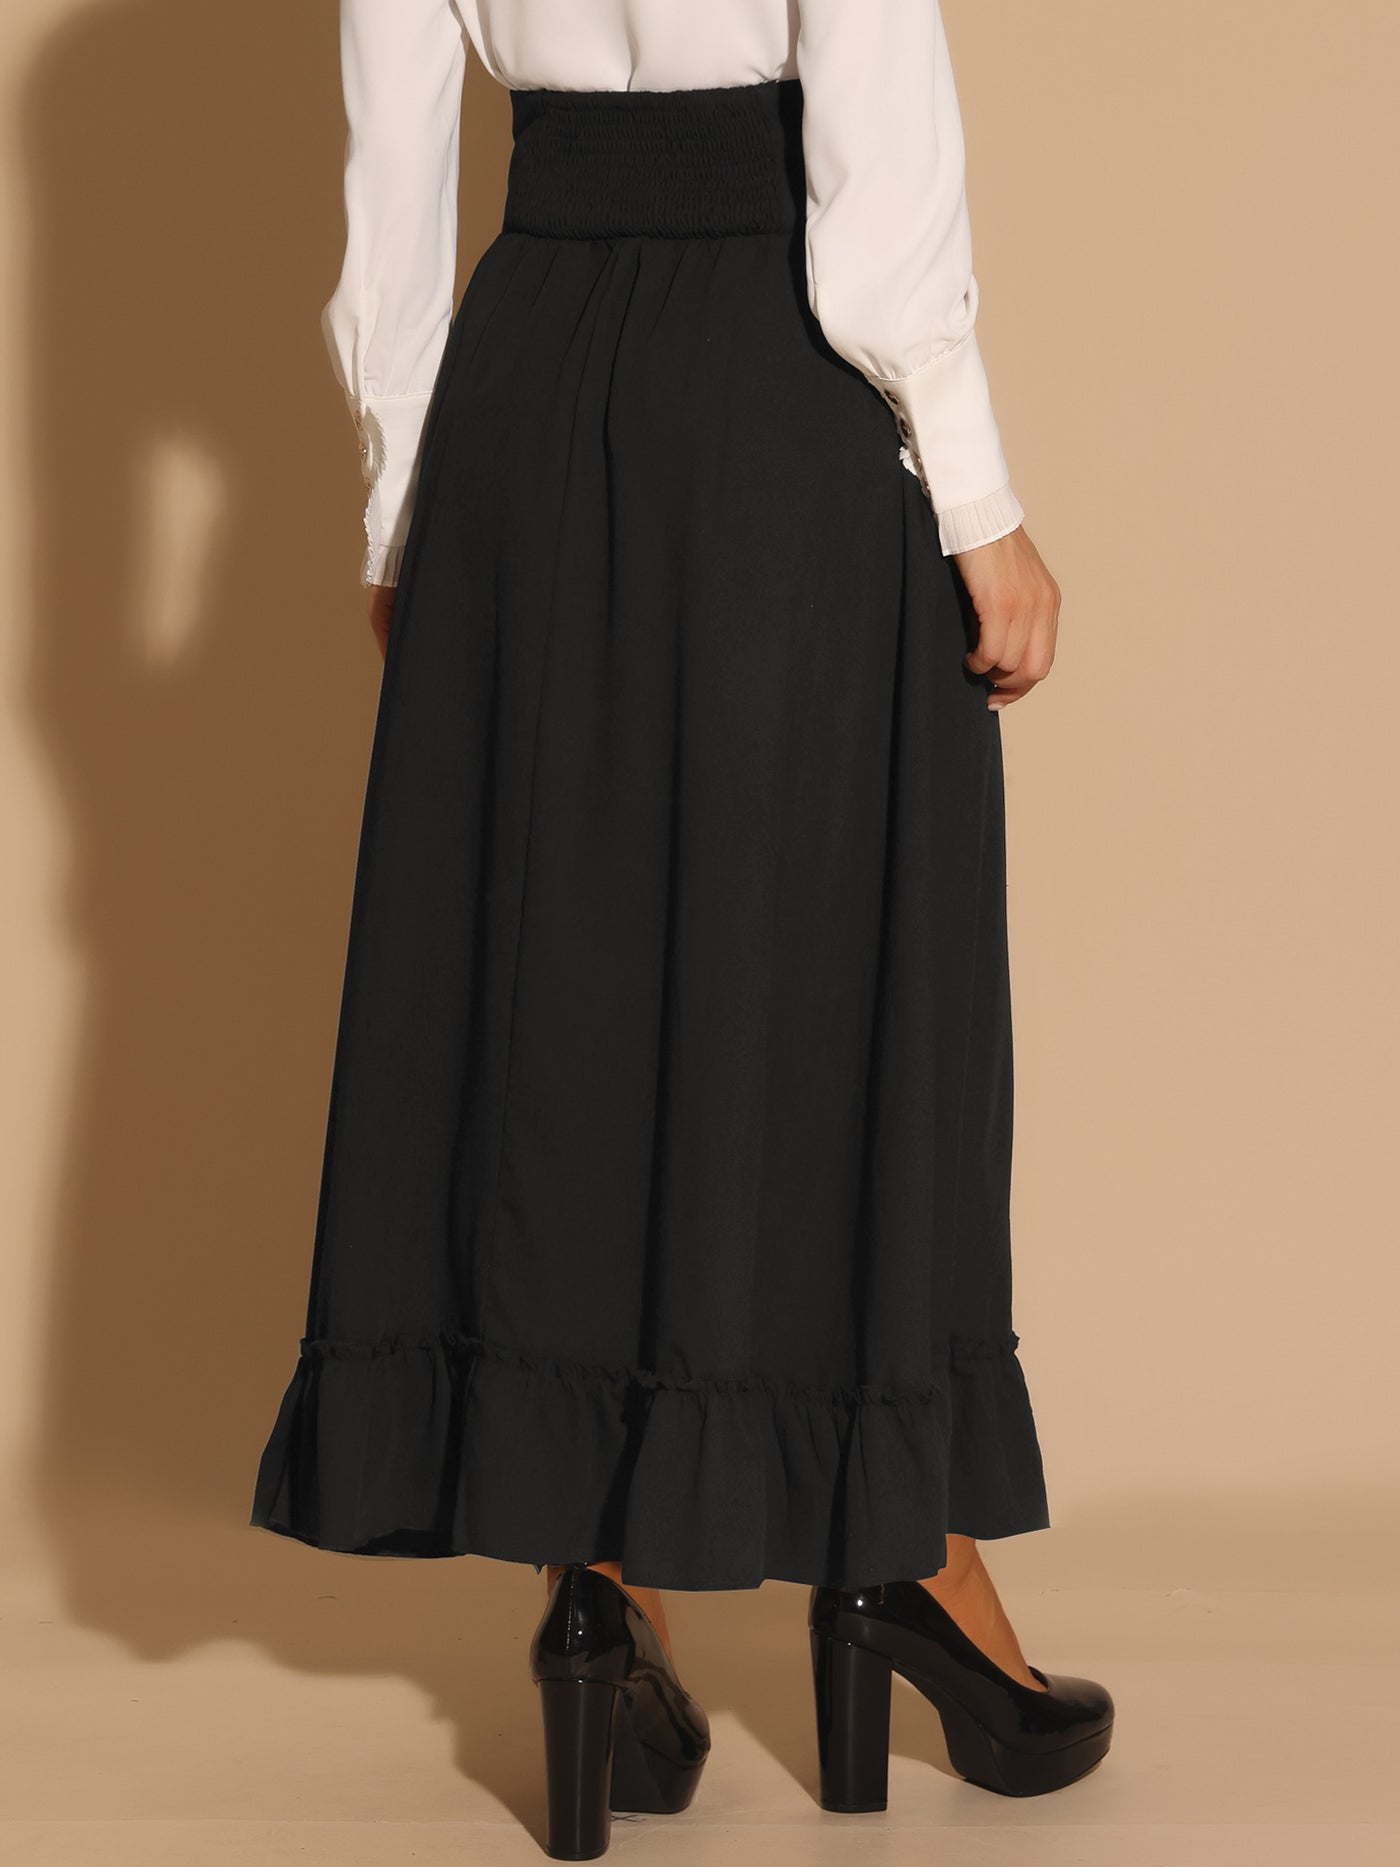 Allegra K Gothic Skirt for Women's Vintage High Waist Button Decor Lace Up Maxi Skirts